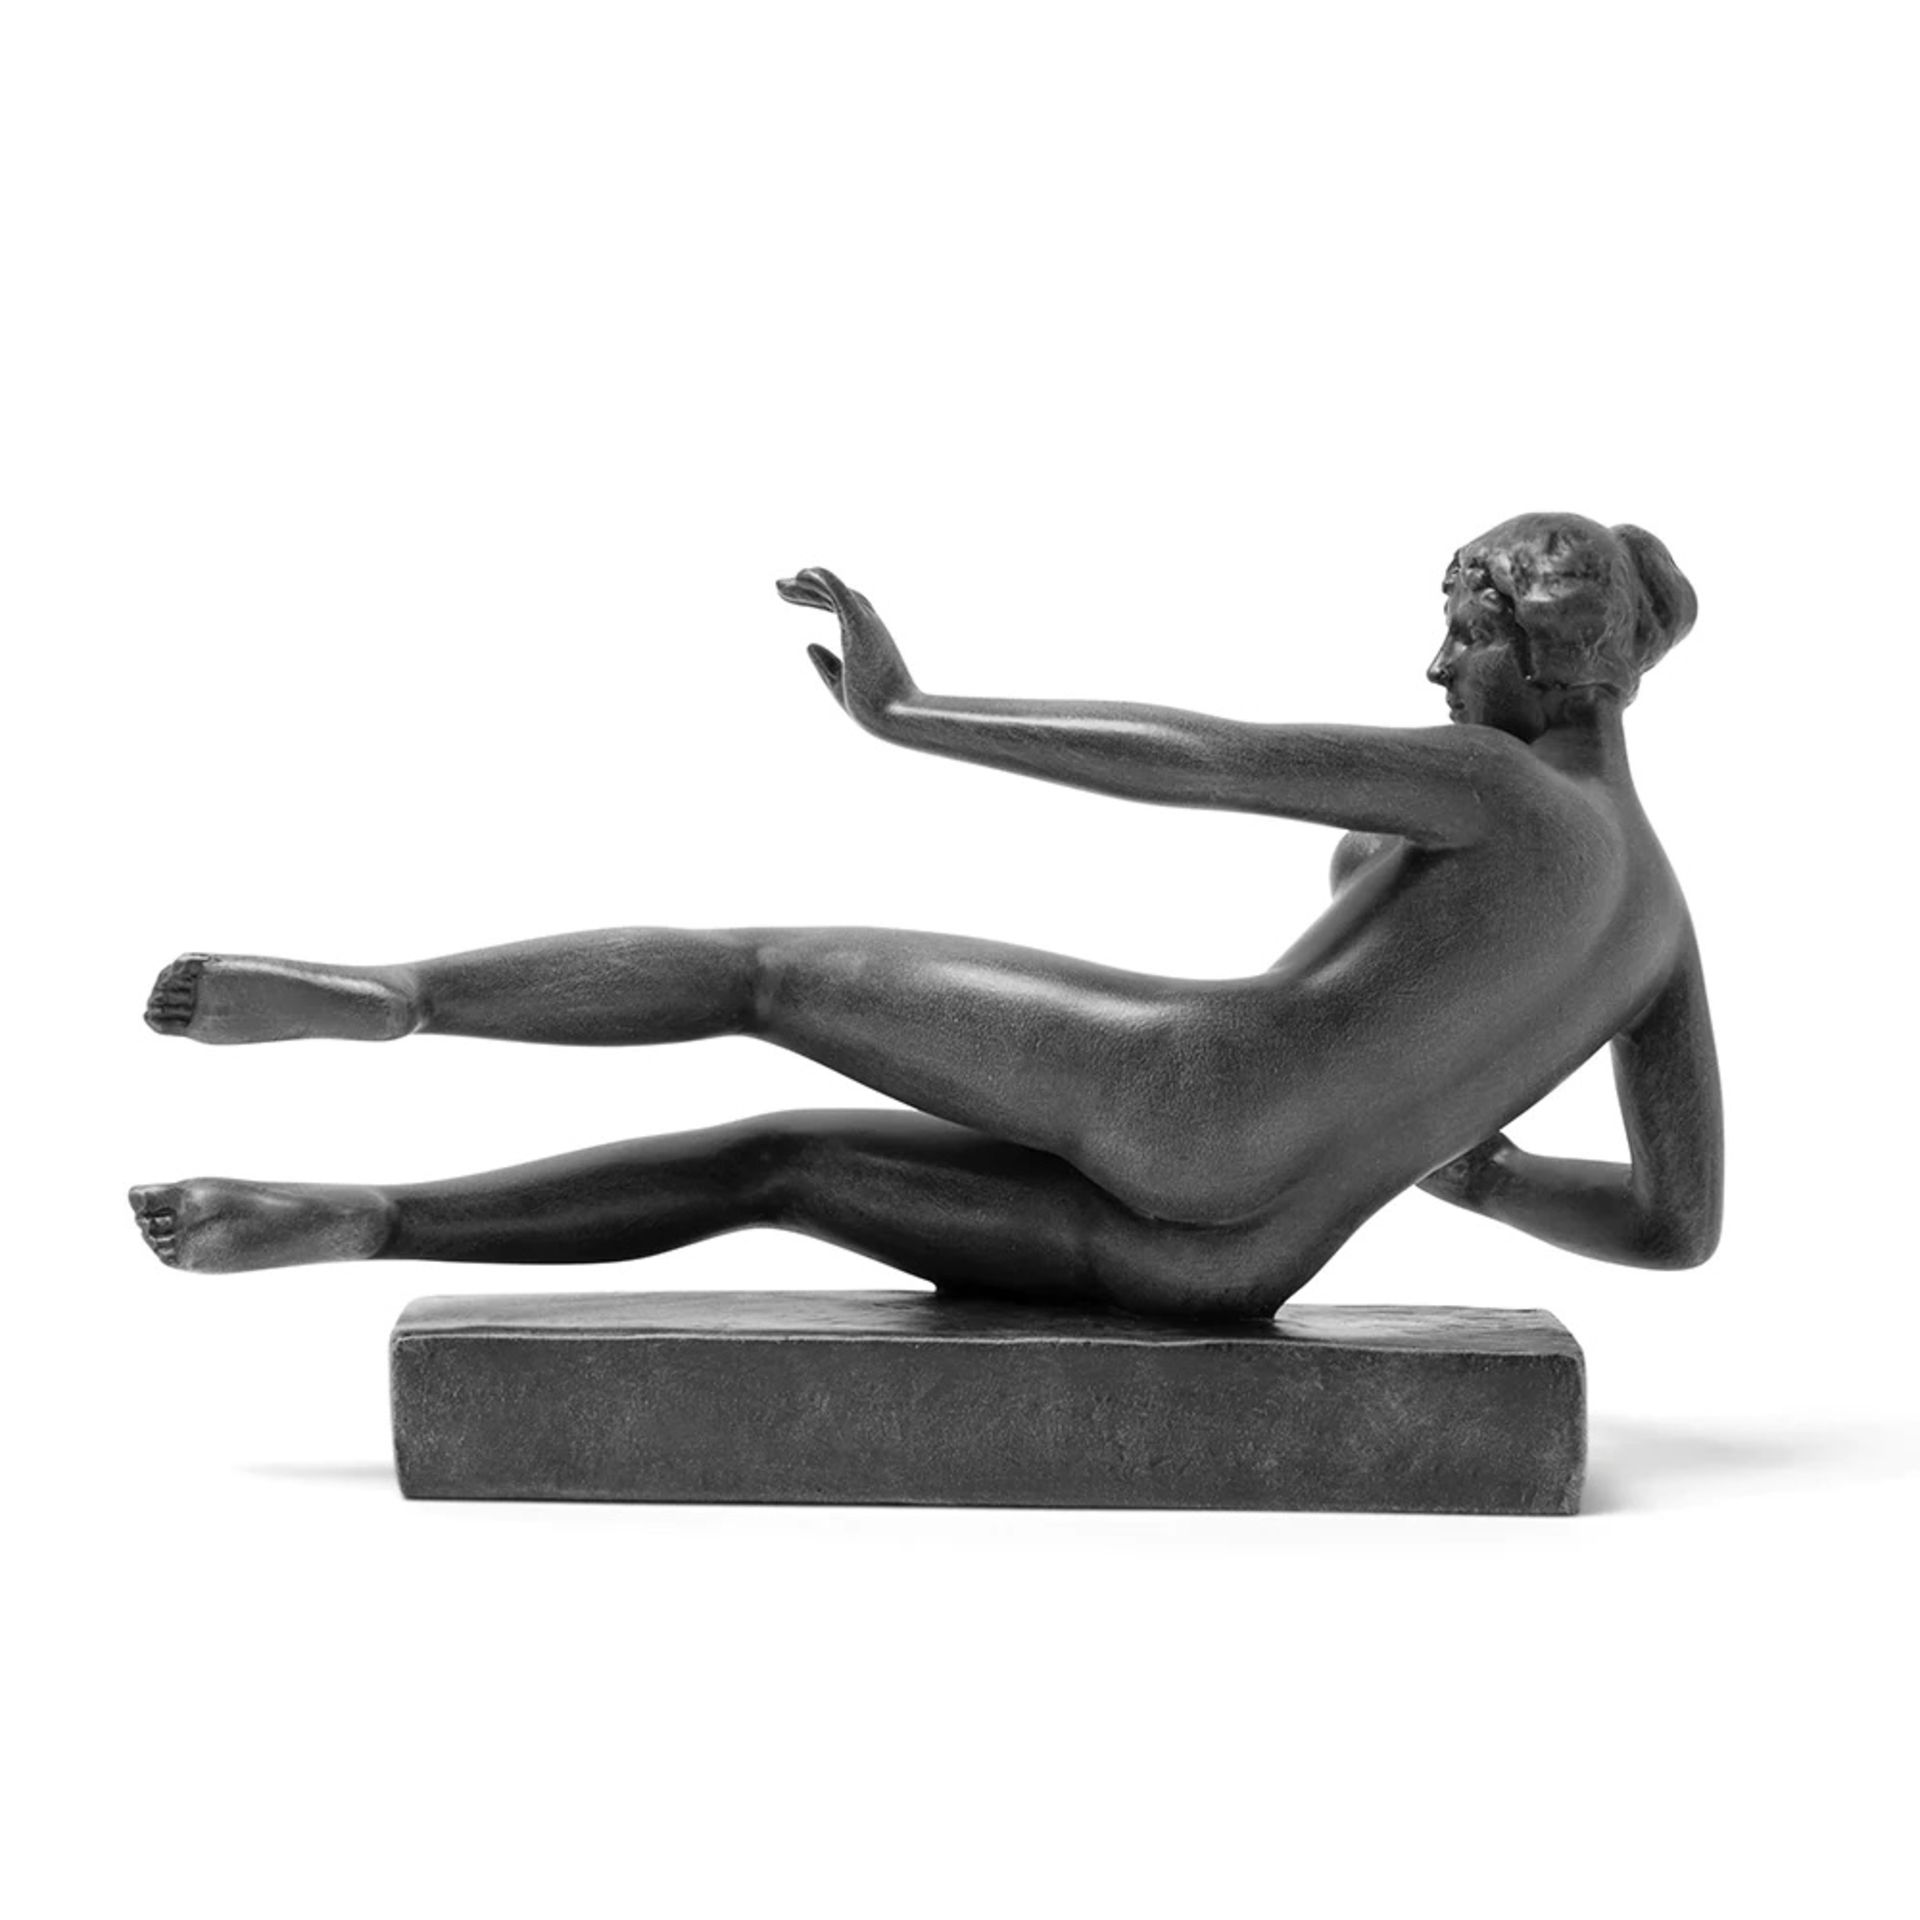 Aristide Maillol "L'Air" Sculpture